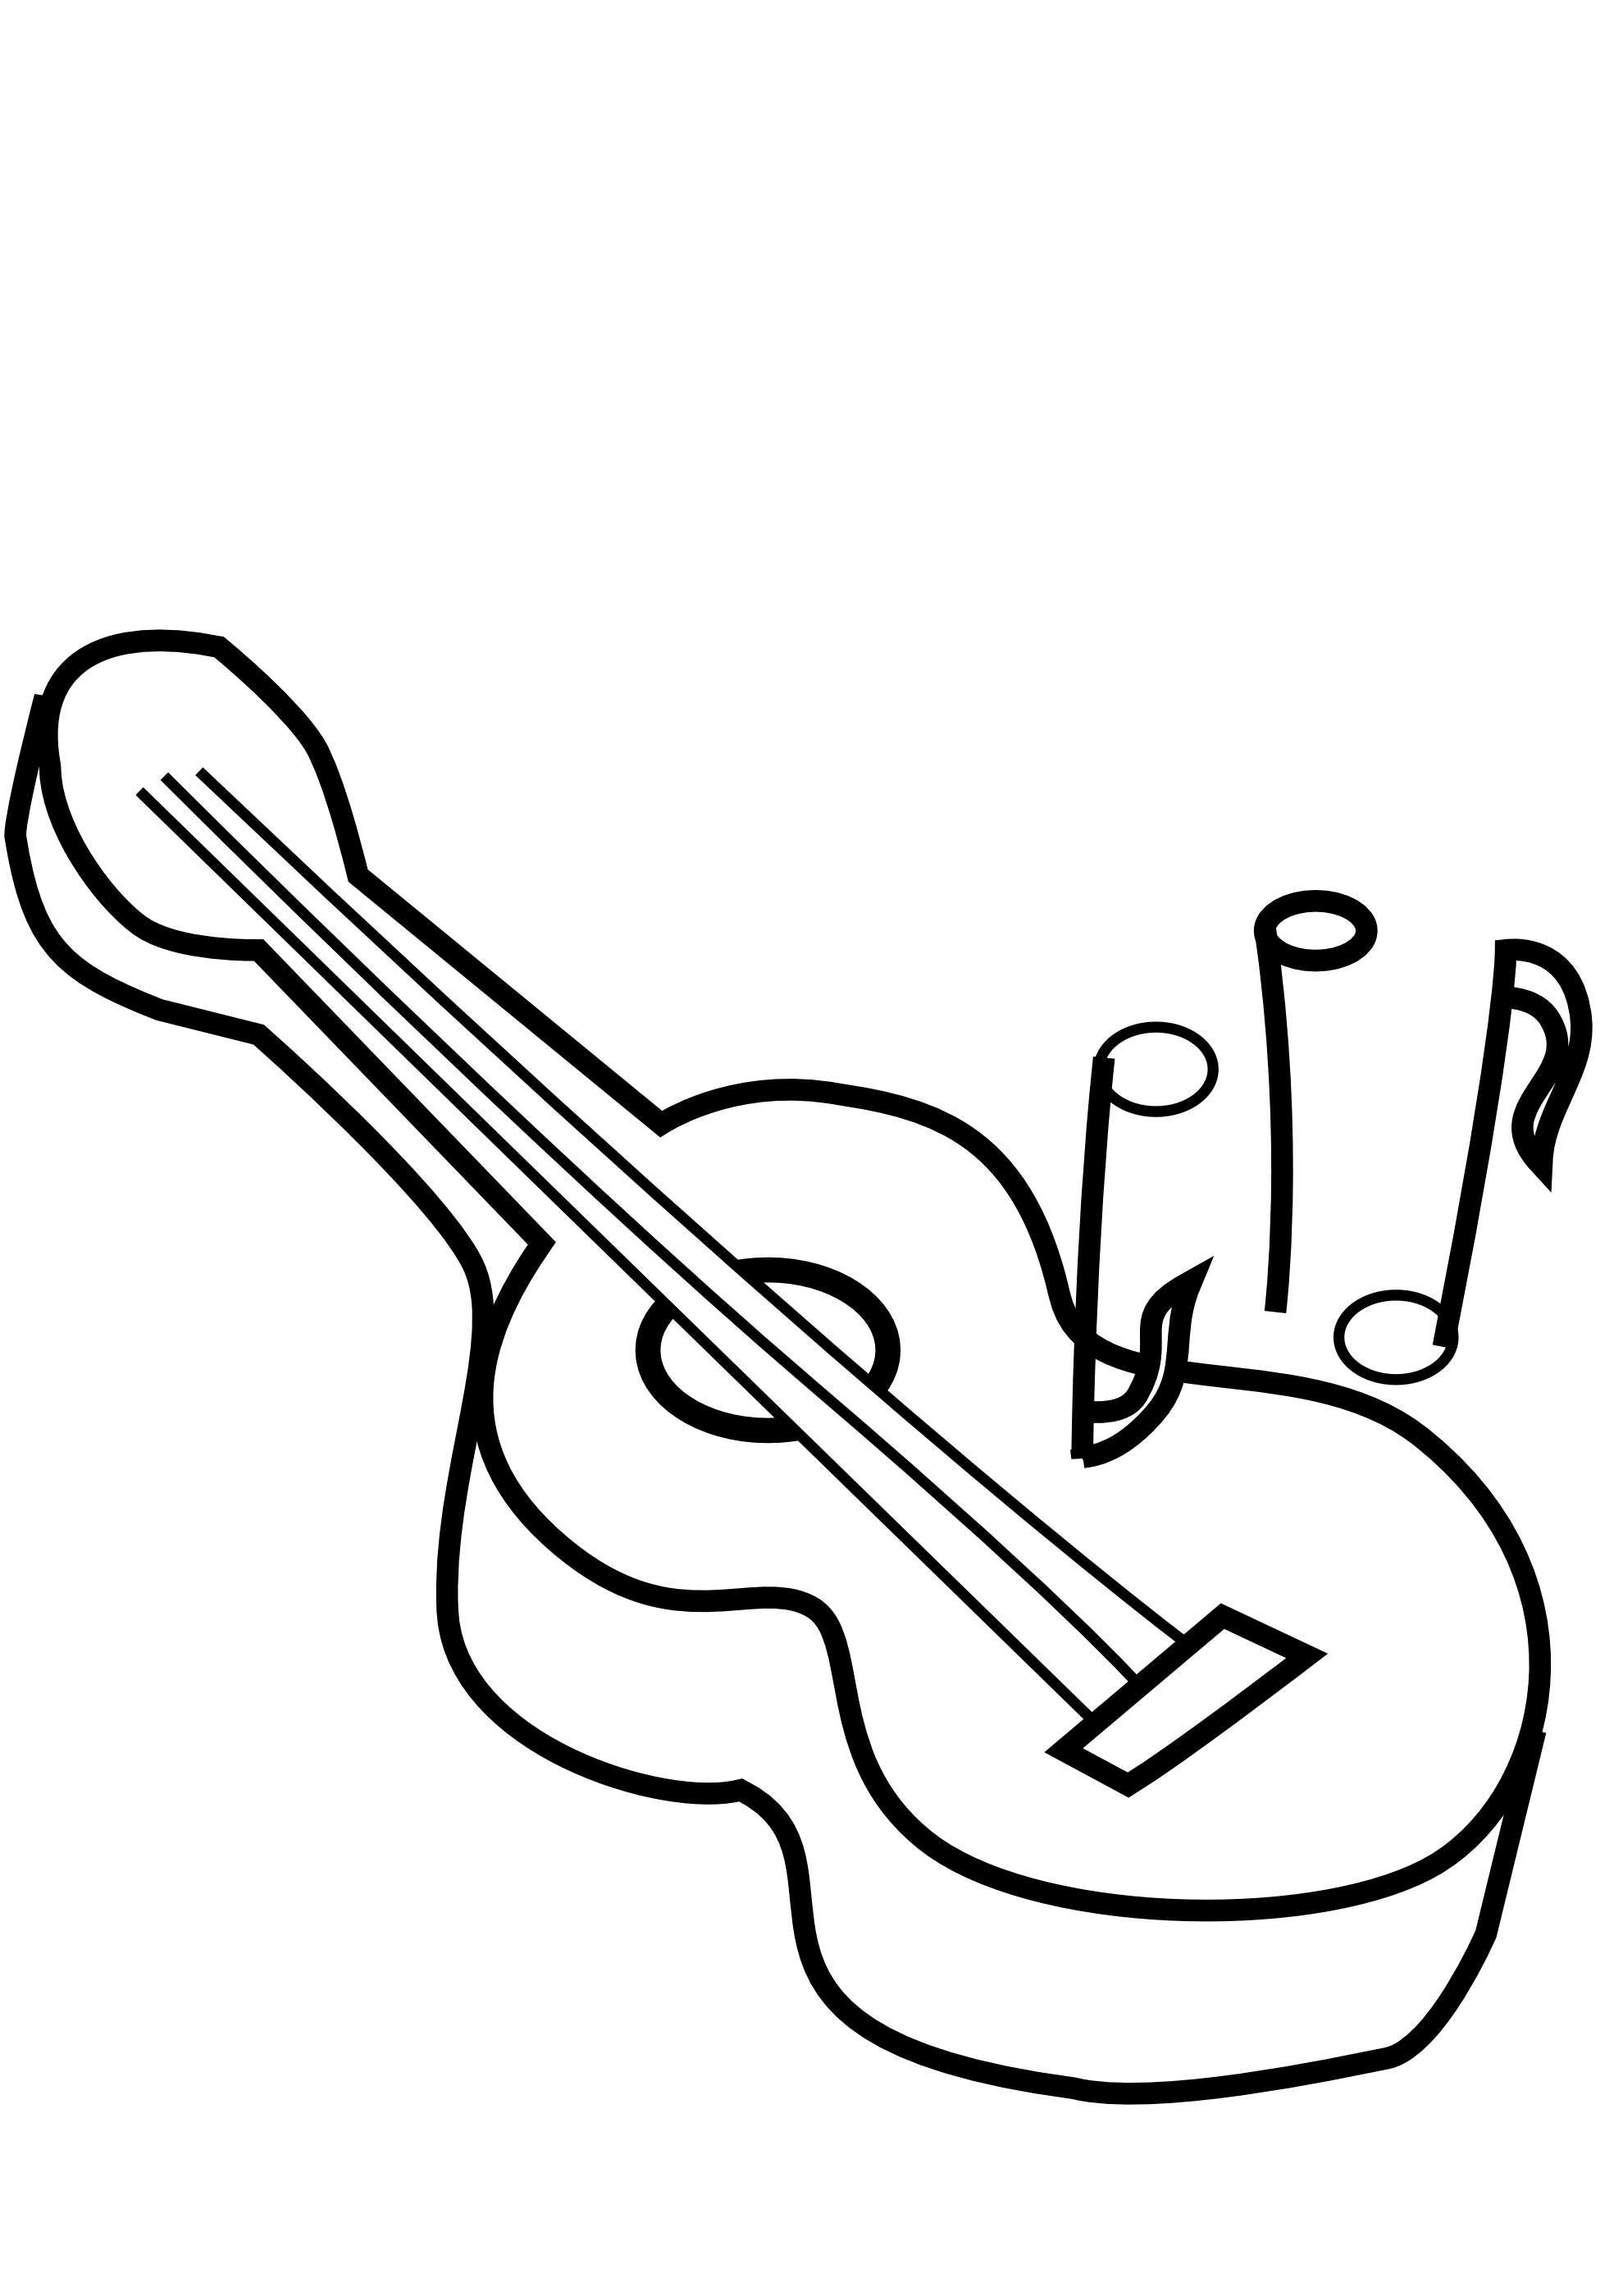 ukulele clipart black and white - Clip Art Library